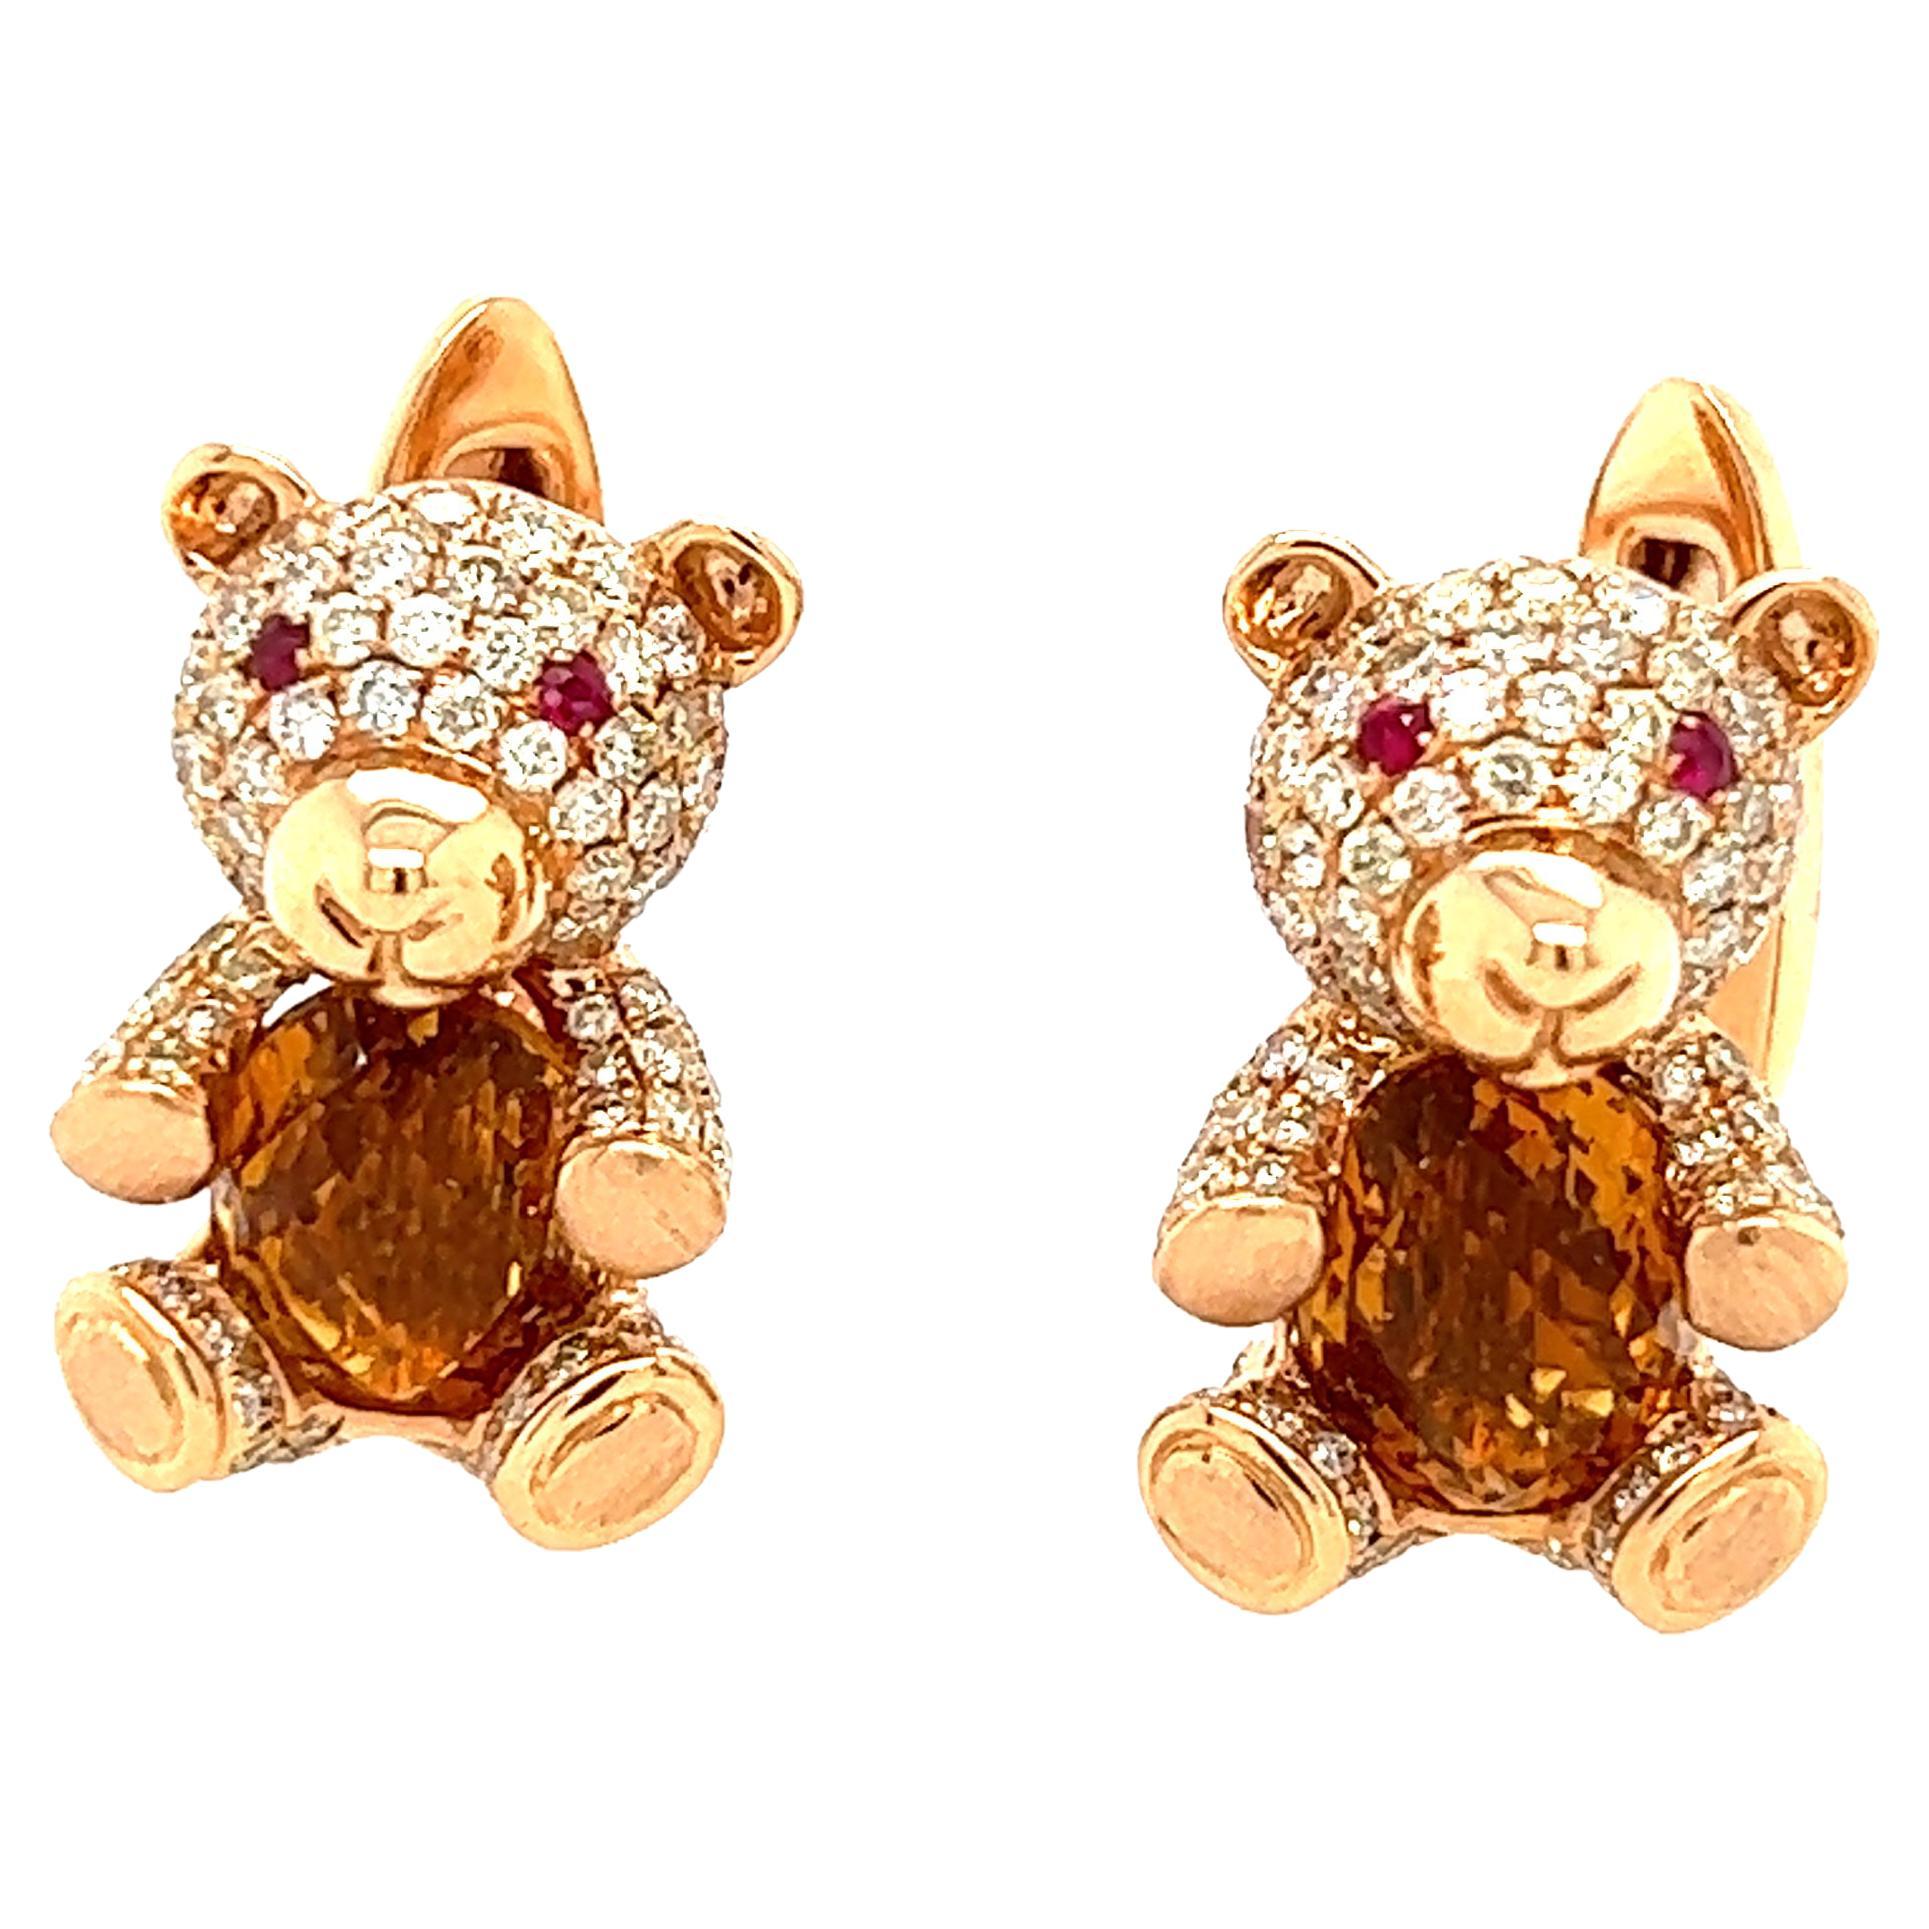 18K Gold Citrine Bear Cufflinks with Diamonds and Rubies